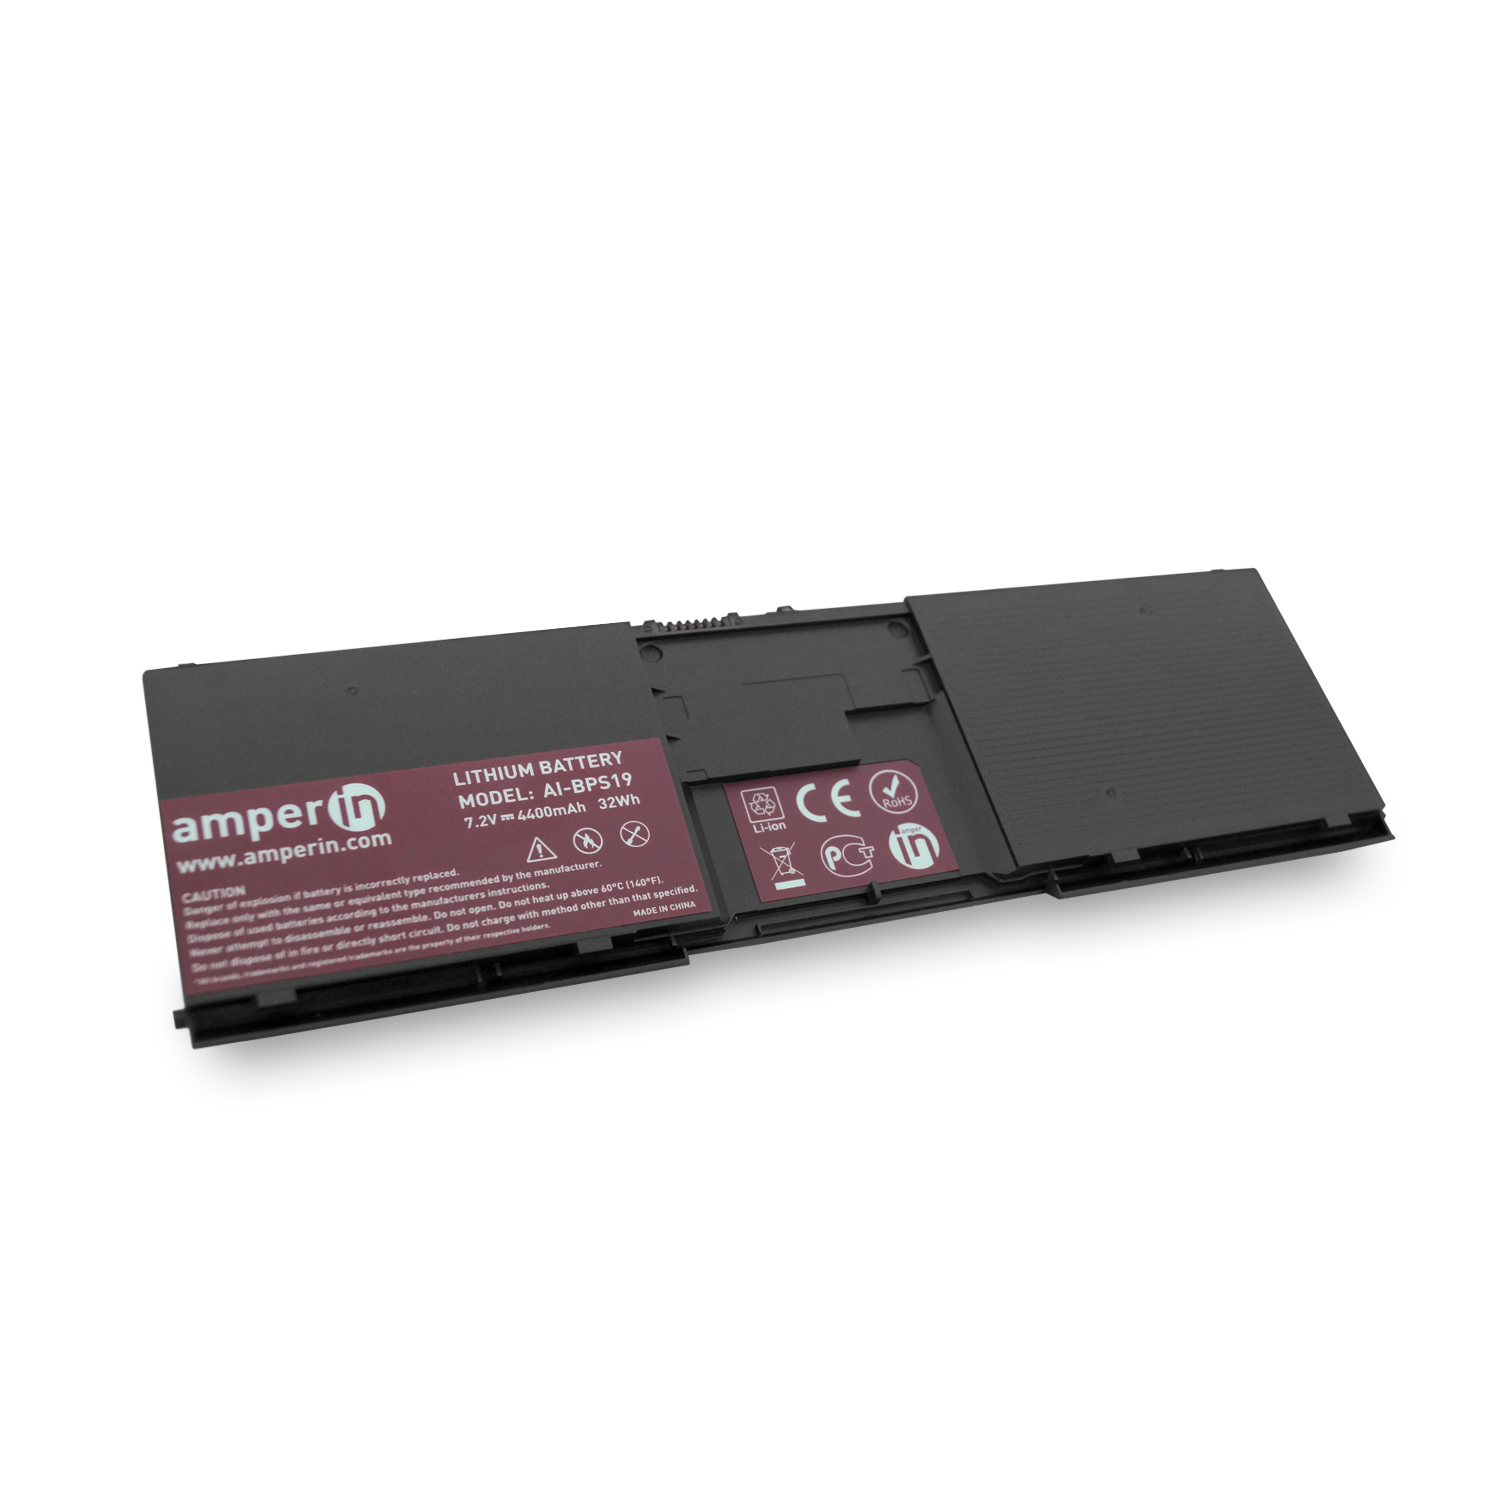 Аккумуляторная батарея AI-BPS19 для ноутбука Sony Vaio VPC-X 7.2V 4400mAh (49Wh) Brown Amperin 